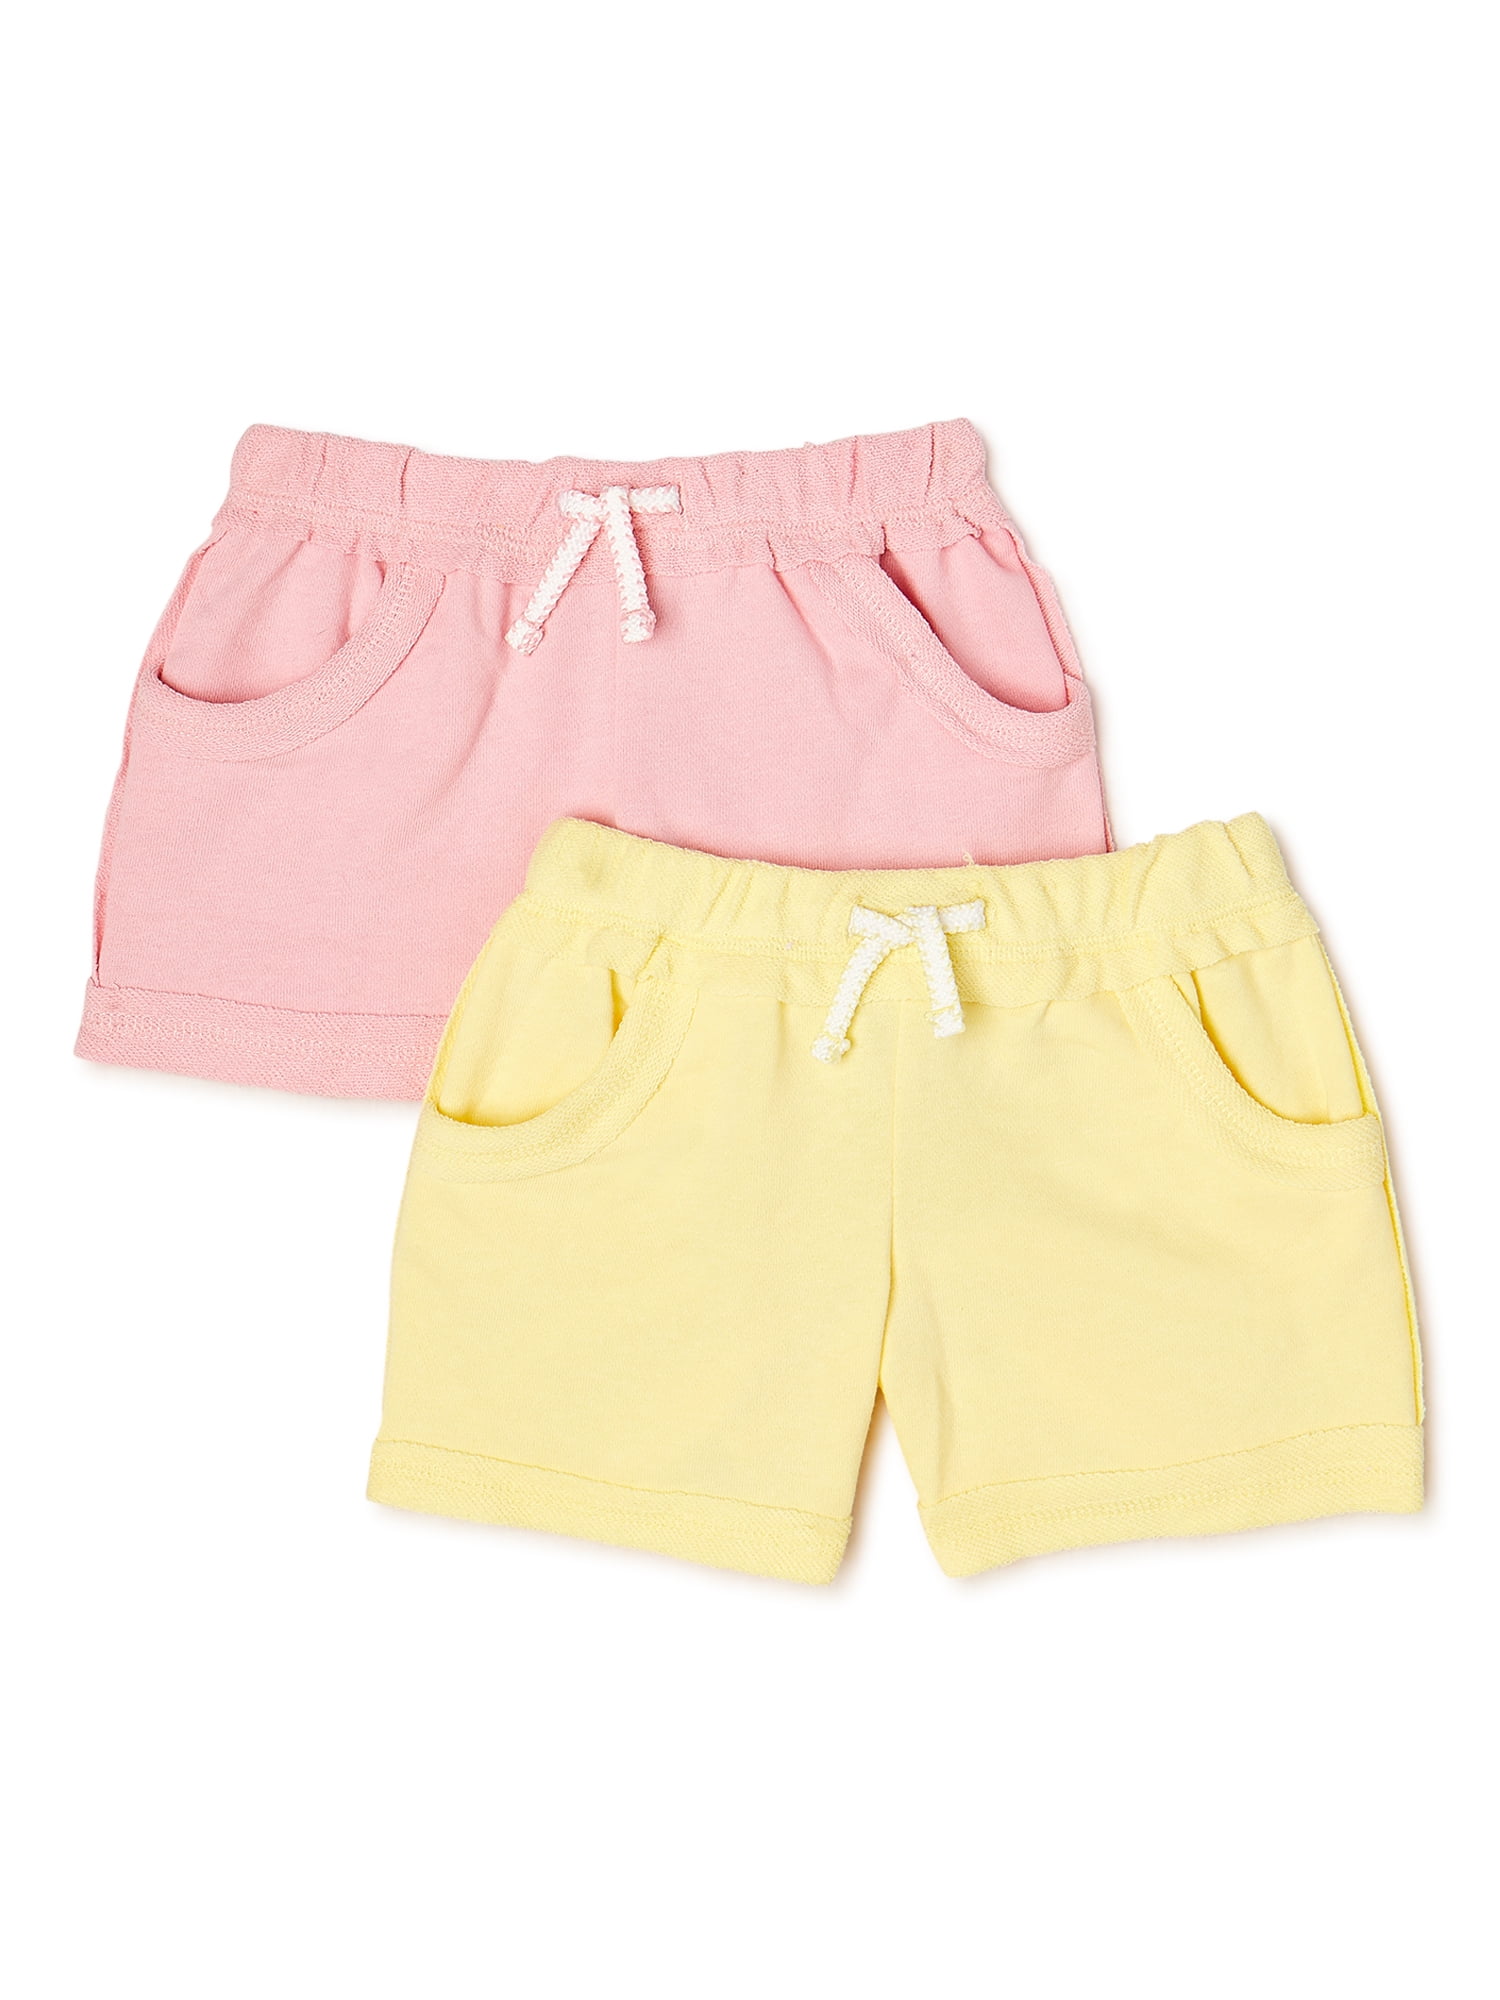 365 Kids From Garanimals Girls Solid Shorts, 2-Pack, Sizes 4-10 -  Walmart.com